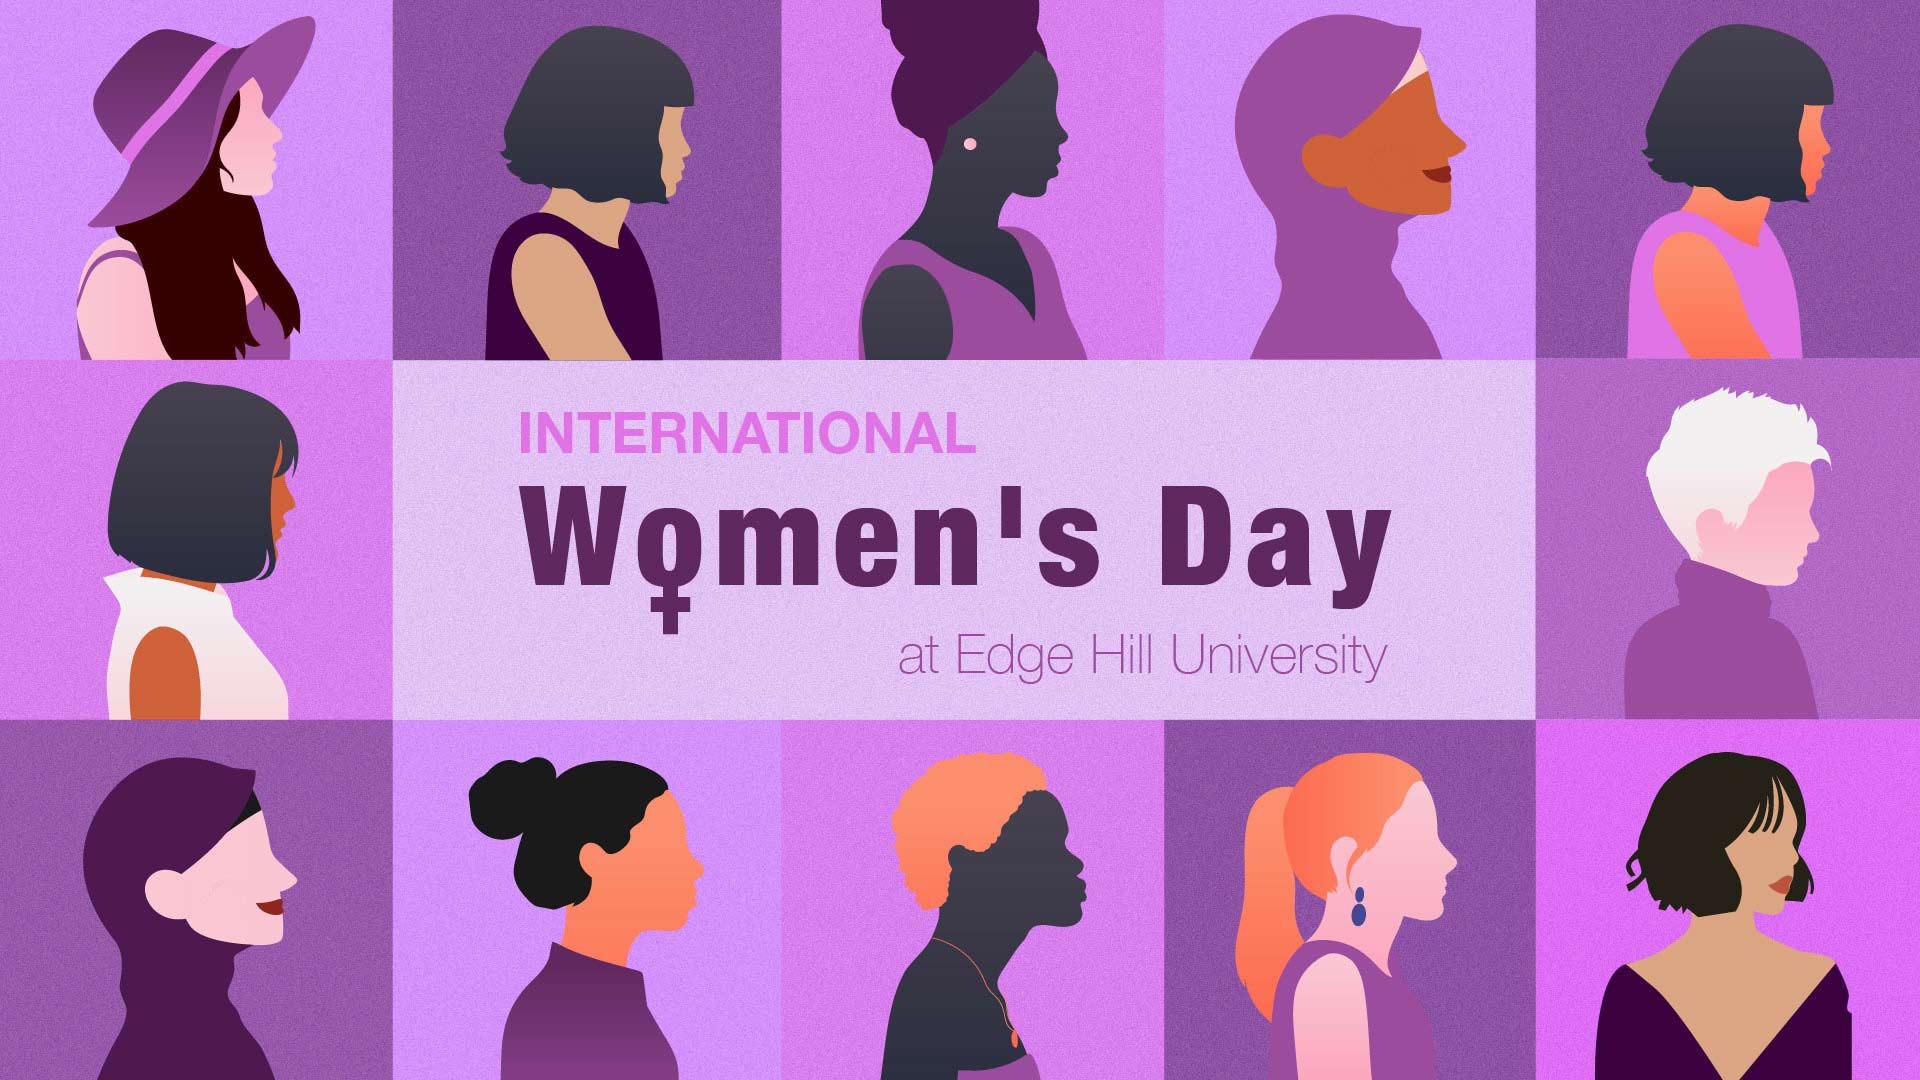 Poster for International Women's Day at Edge Hill University.